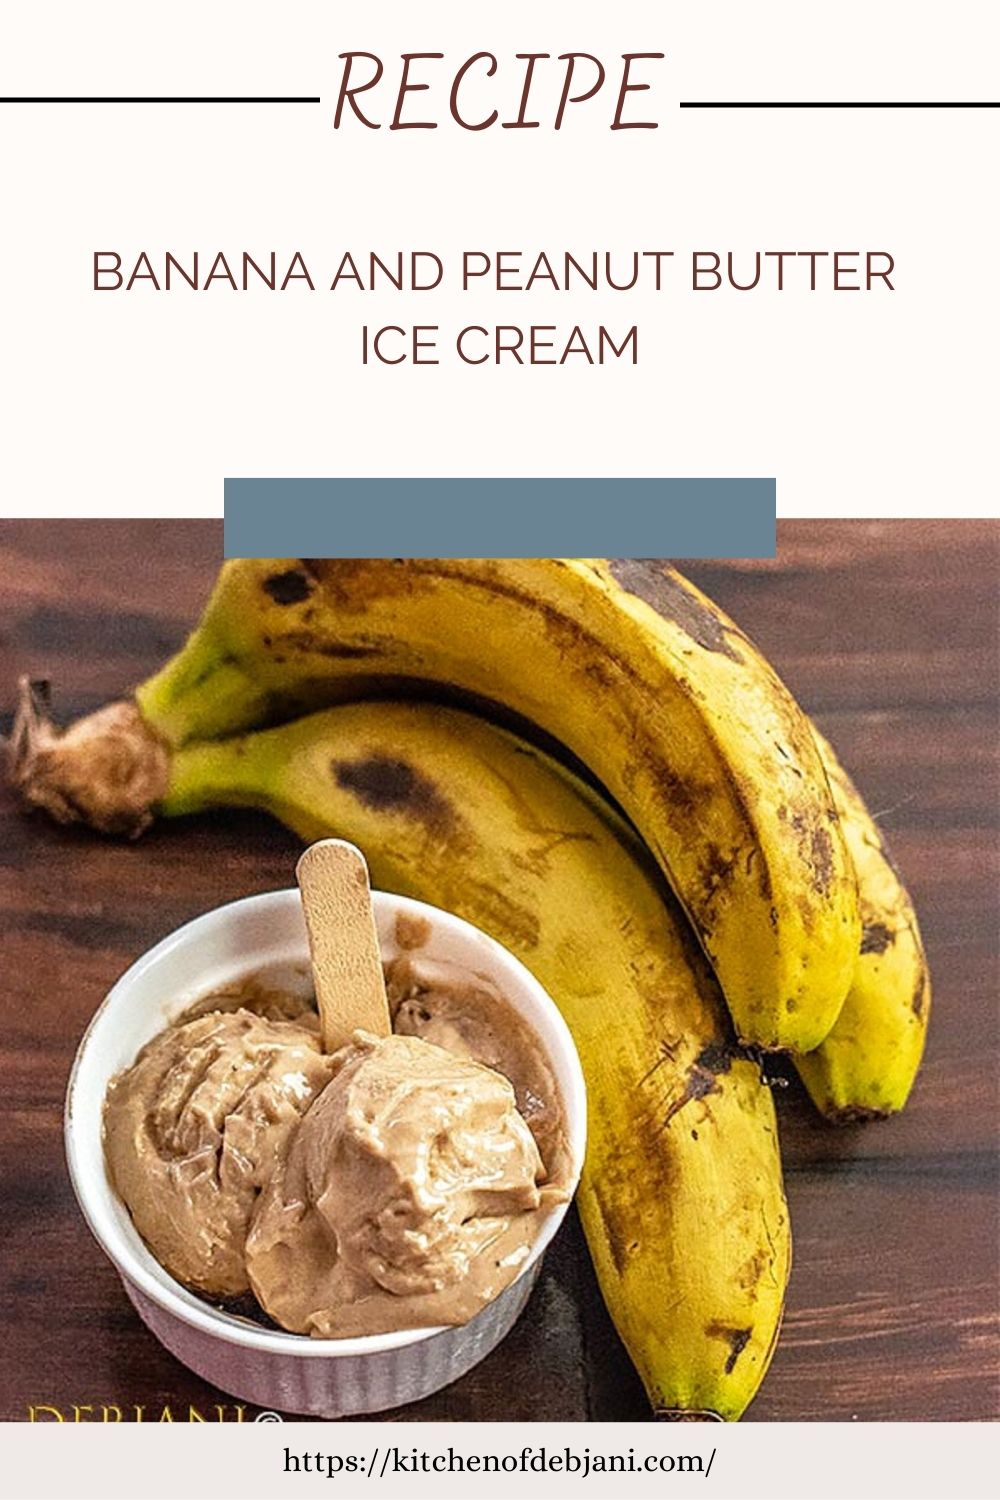 %banana peanut butter ice cream recipe Photo Food Pinterest Pin